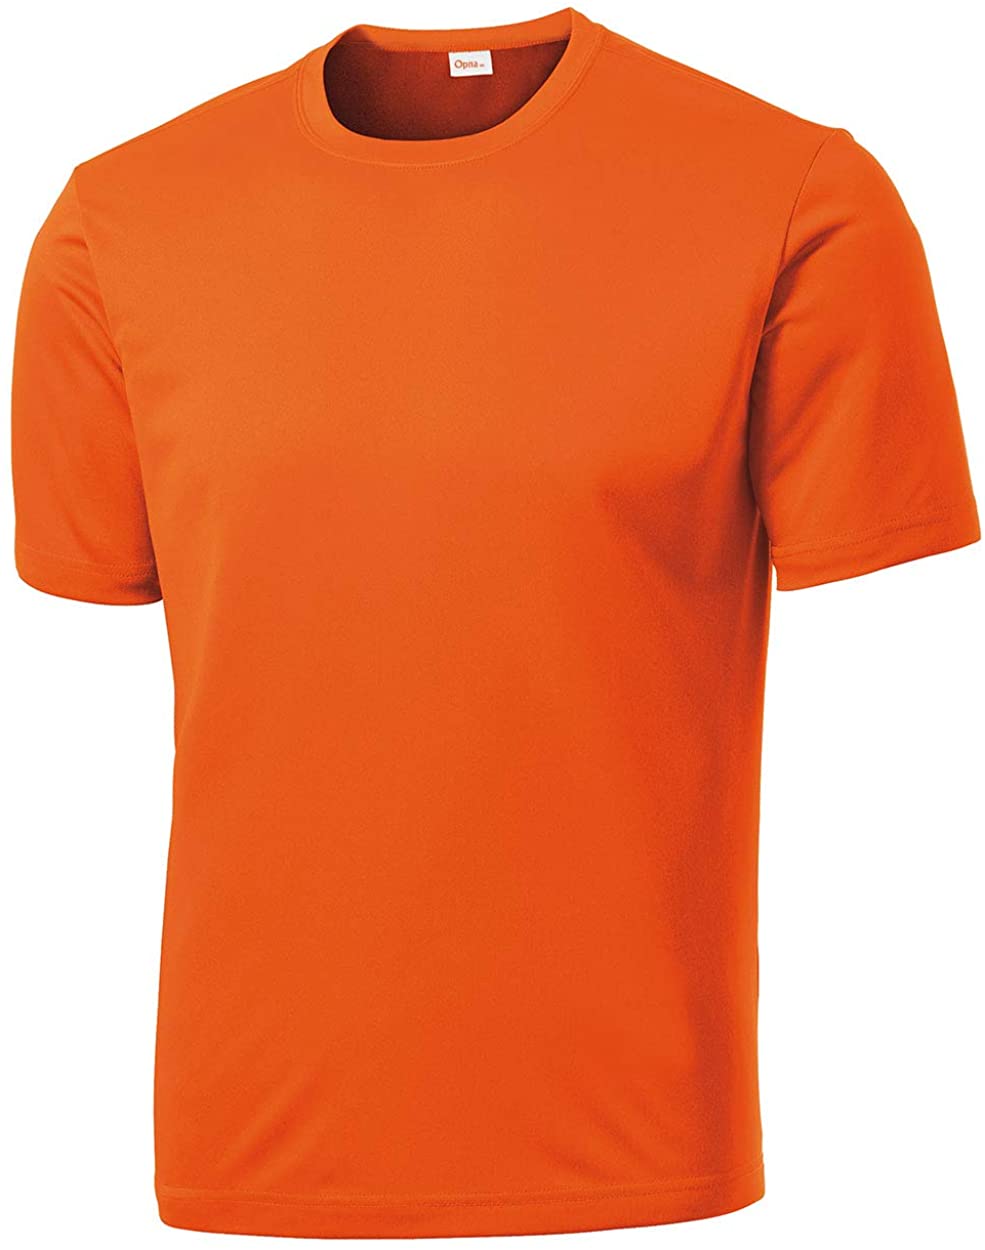 Opna Mens Big & Tall Short Sleeve Moisture Wicking Athletic T-Shirts Regular Sizes & XLTs 